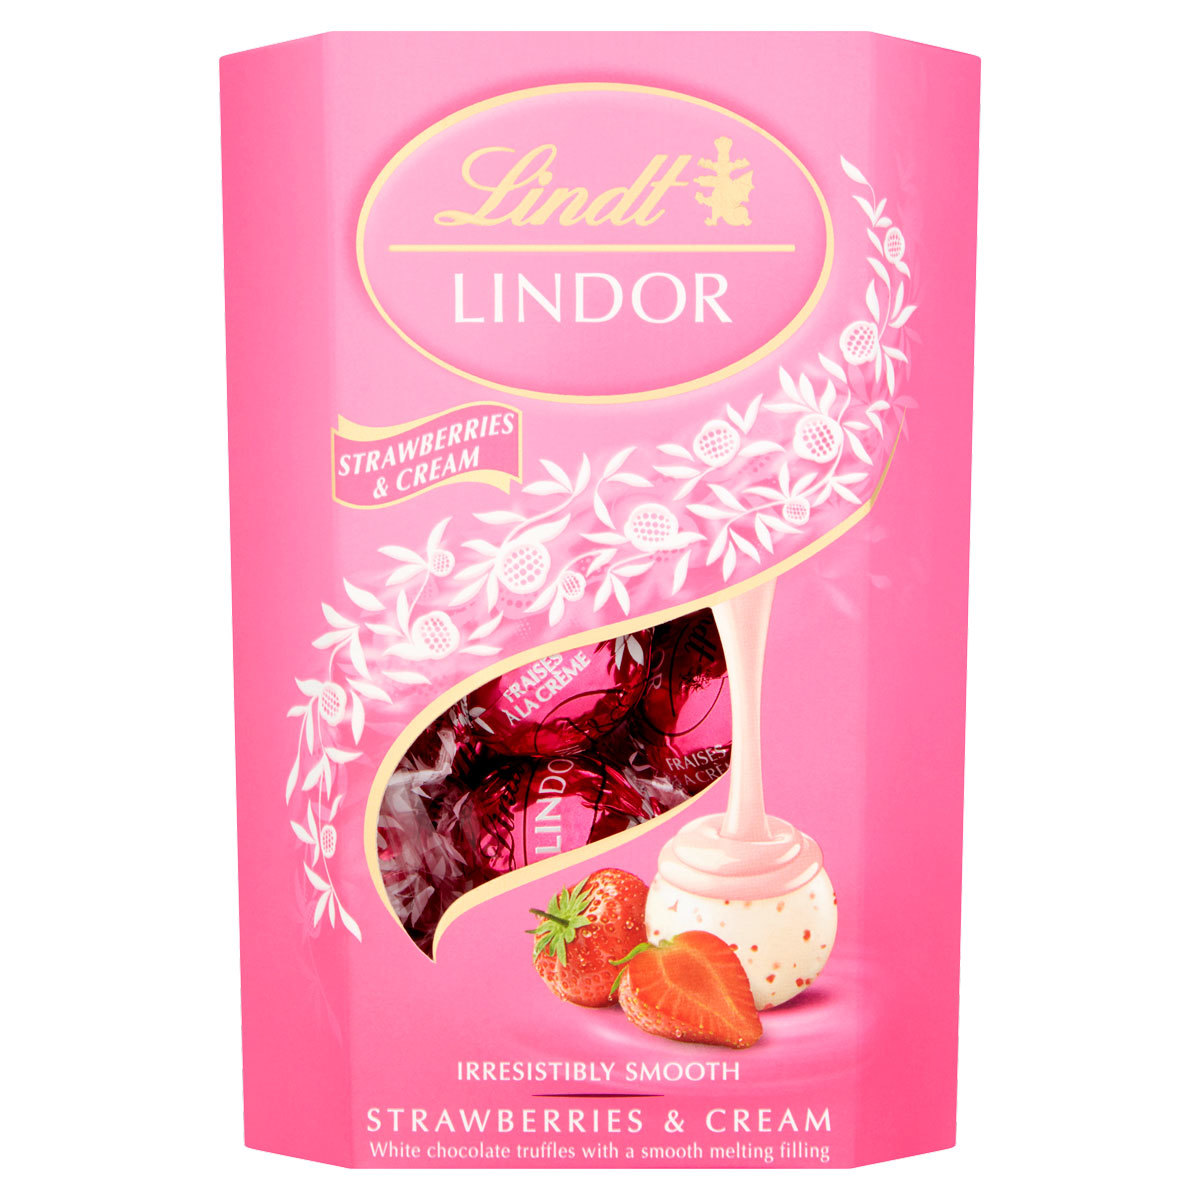 Lindt Lindor Milk Chocolate And Strawberries And Cream Chocolate Truffles 4 X 200g Costco Uk 7450